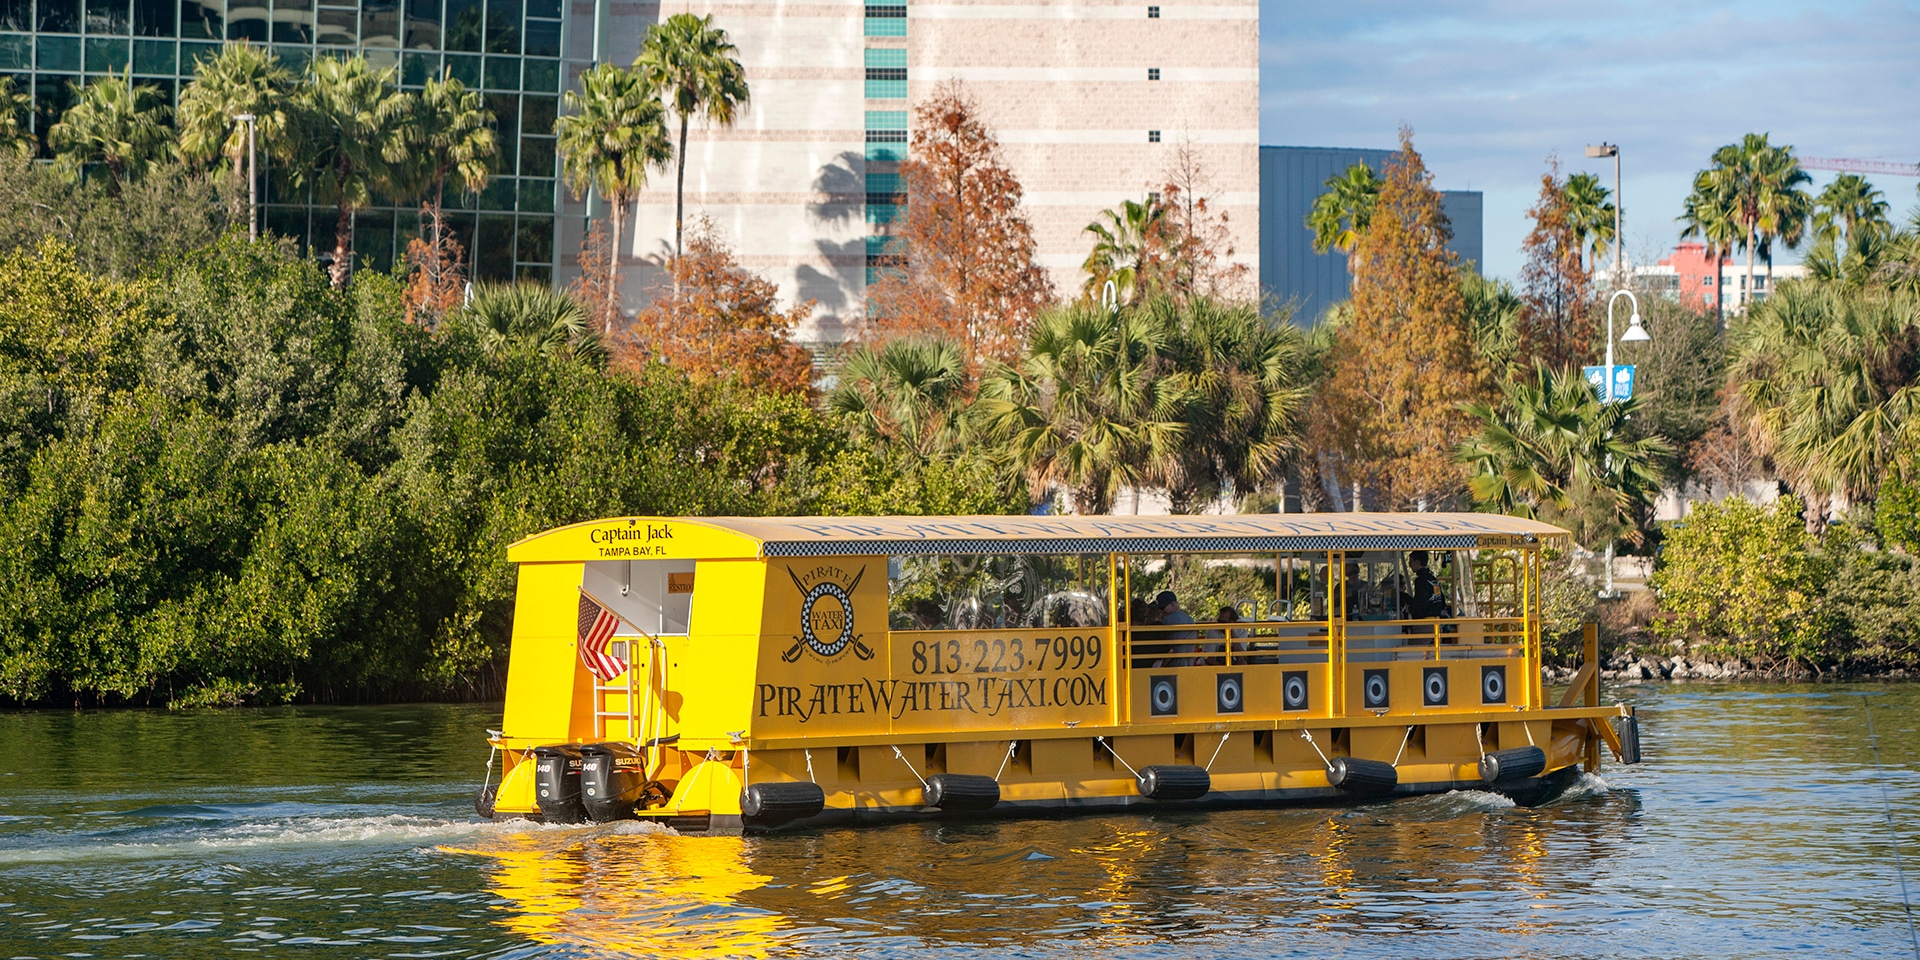 Tampa pirate water taxi